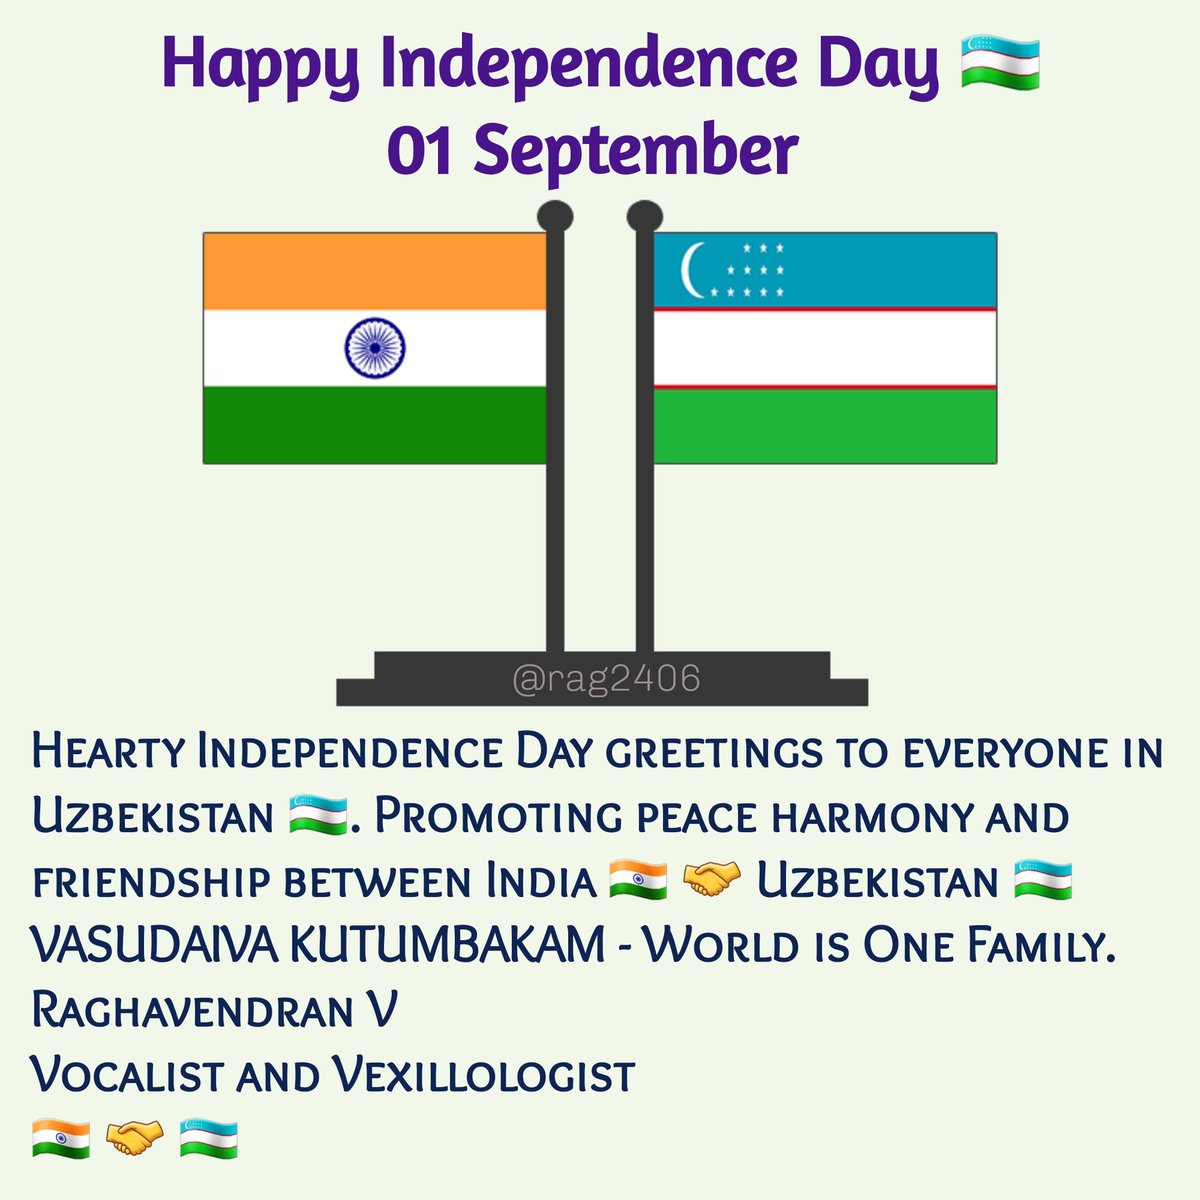 Happy Independence Day to everyone in Uzbekistan 🇺🇿. Vasudaiva Kutumbakam –  World is one family 🇮🇳🤝🇺🇿
@rashtrapatibhvn @narendramodi @PMOIndia @DrSJaishankar @M_Lekhi 
@president_uz @uzbekmfa @FM_Saidov @amb_tashkent @SMirziyoyeva @uzbekistanun